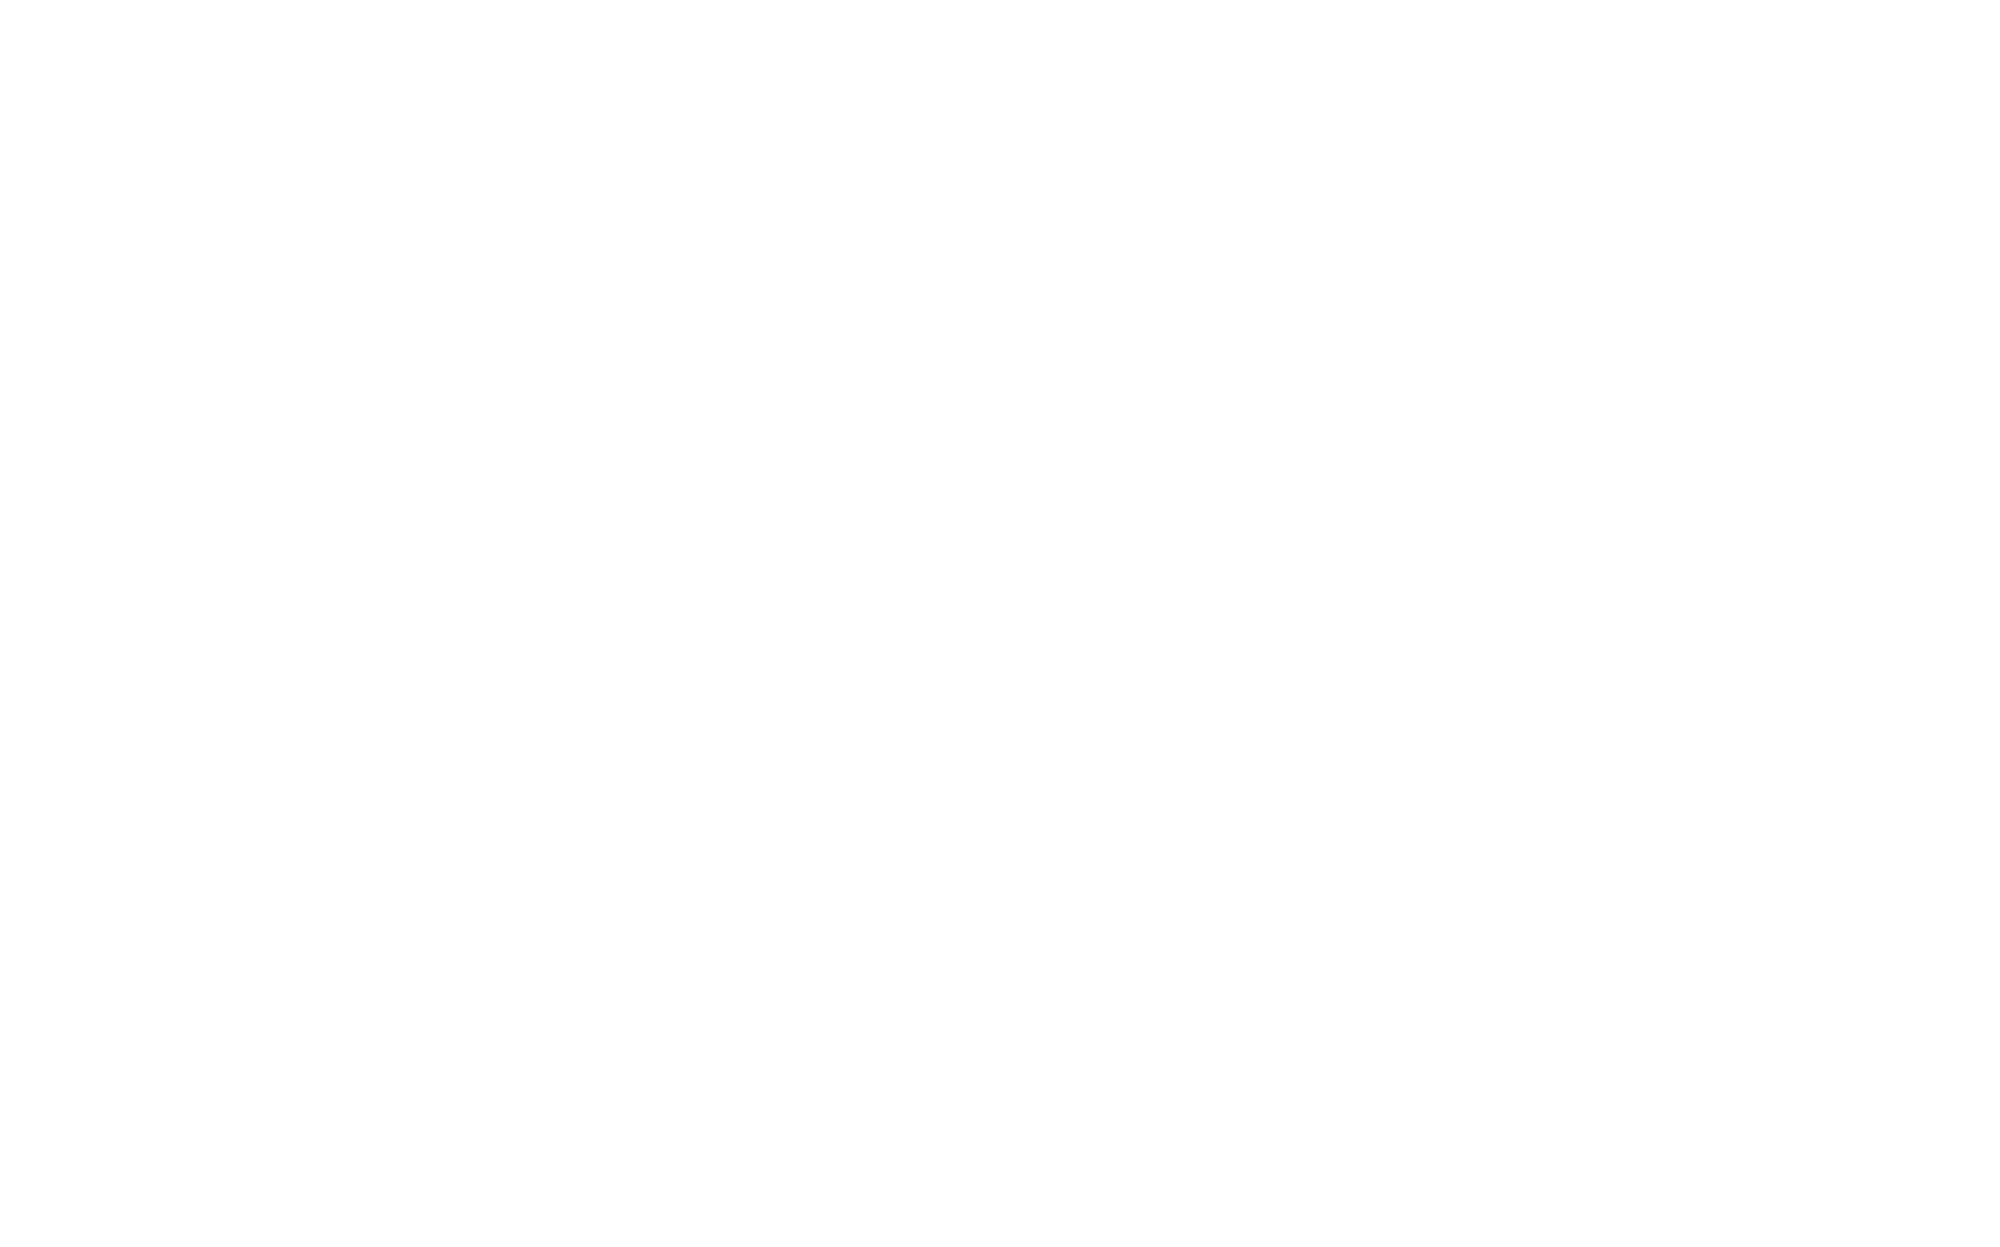 jm-high-resolution-logo-white-transparent